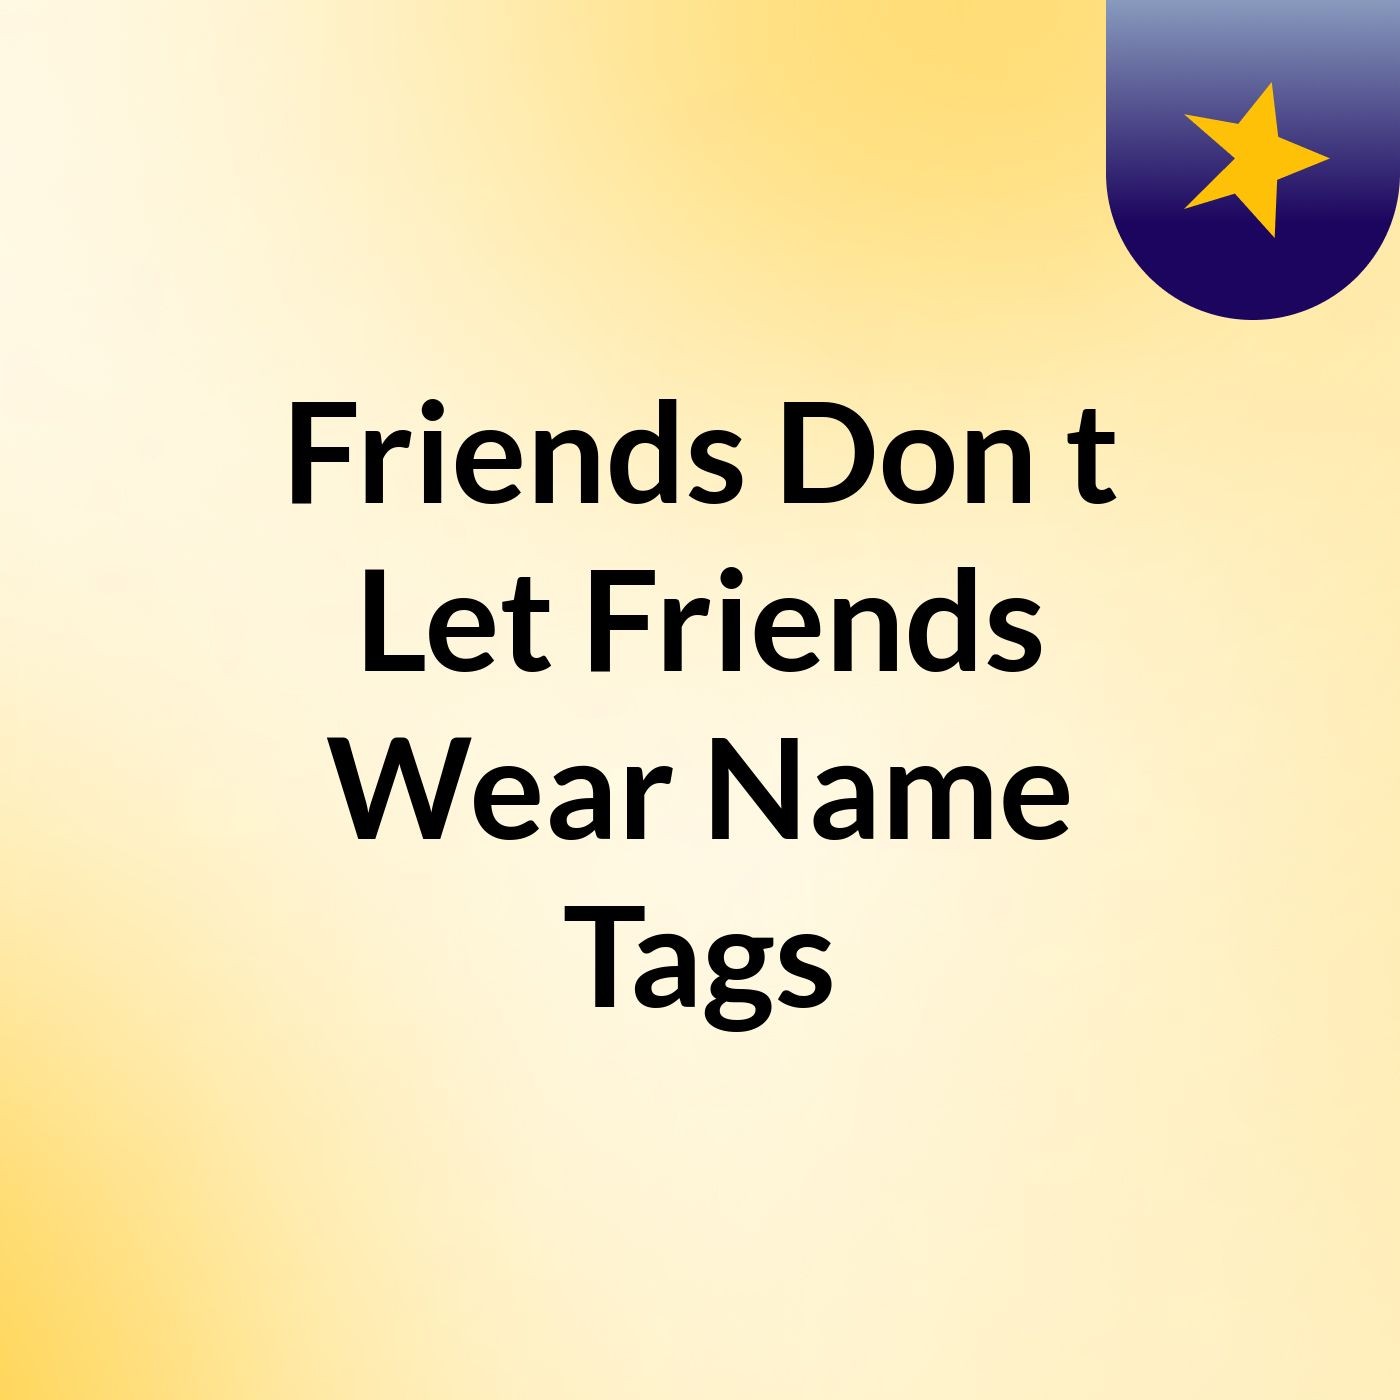 Friends Don't Let Friends Wear Name Tags